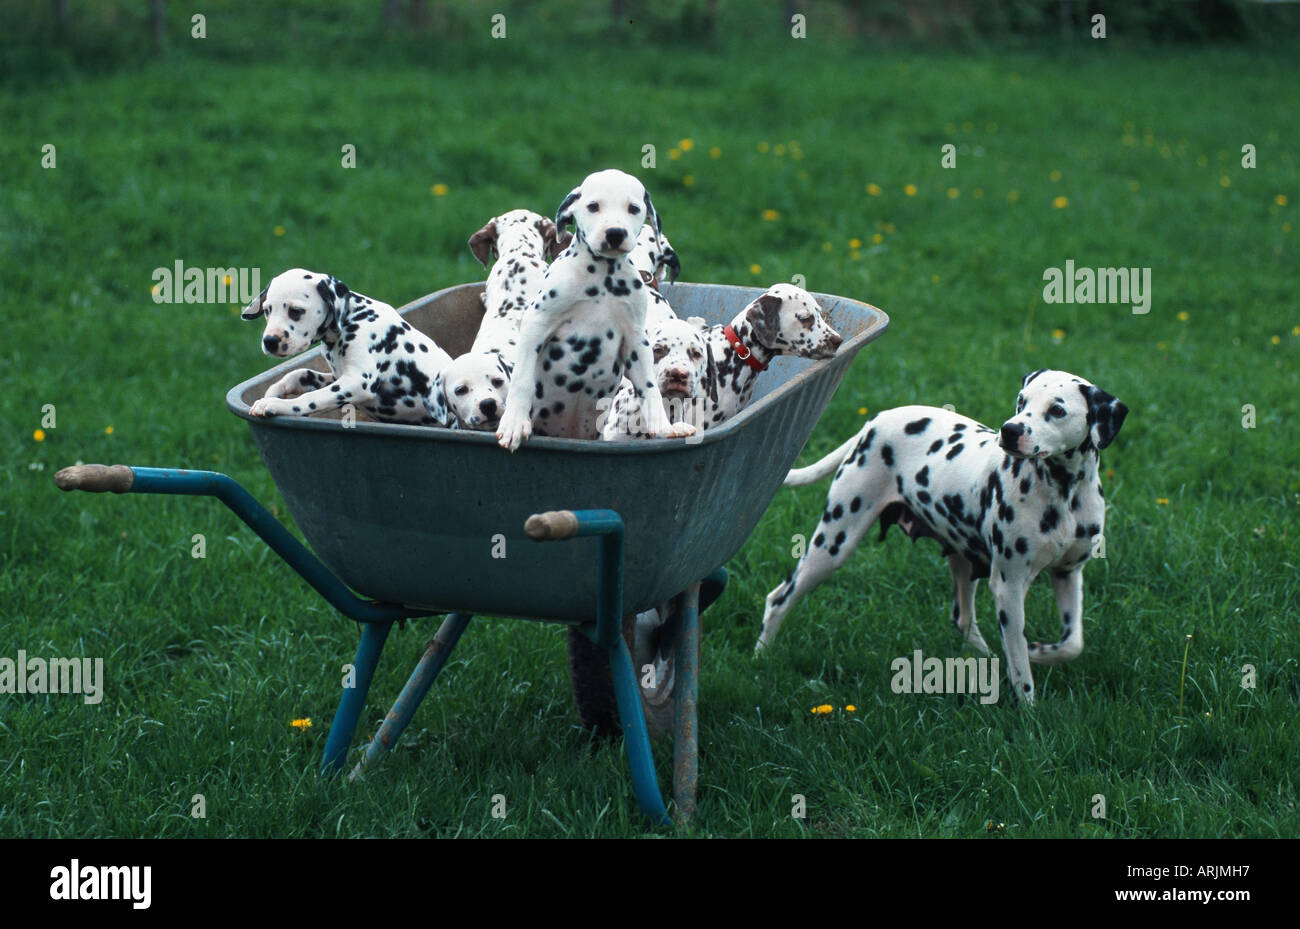 Dalmatian (Canis lupus f. familiaris), puppies in wheel-barrow Stock Photo